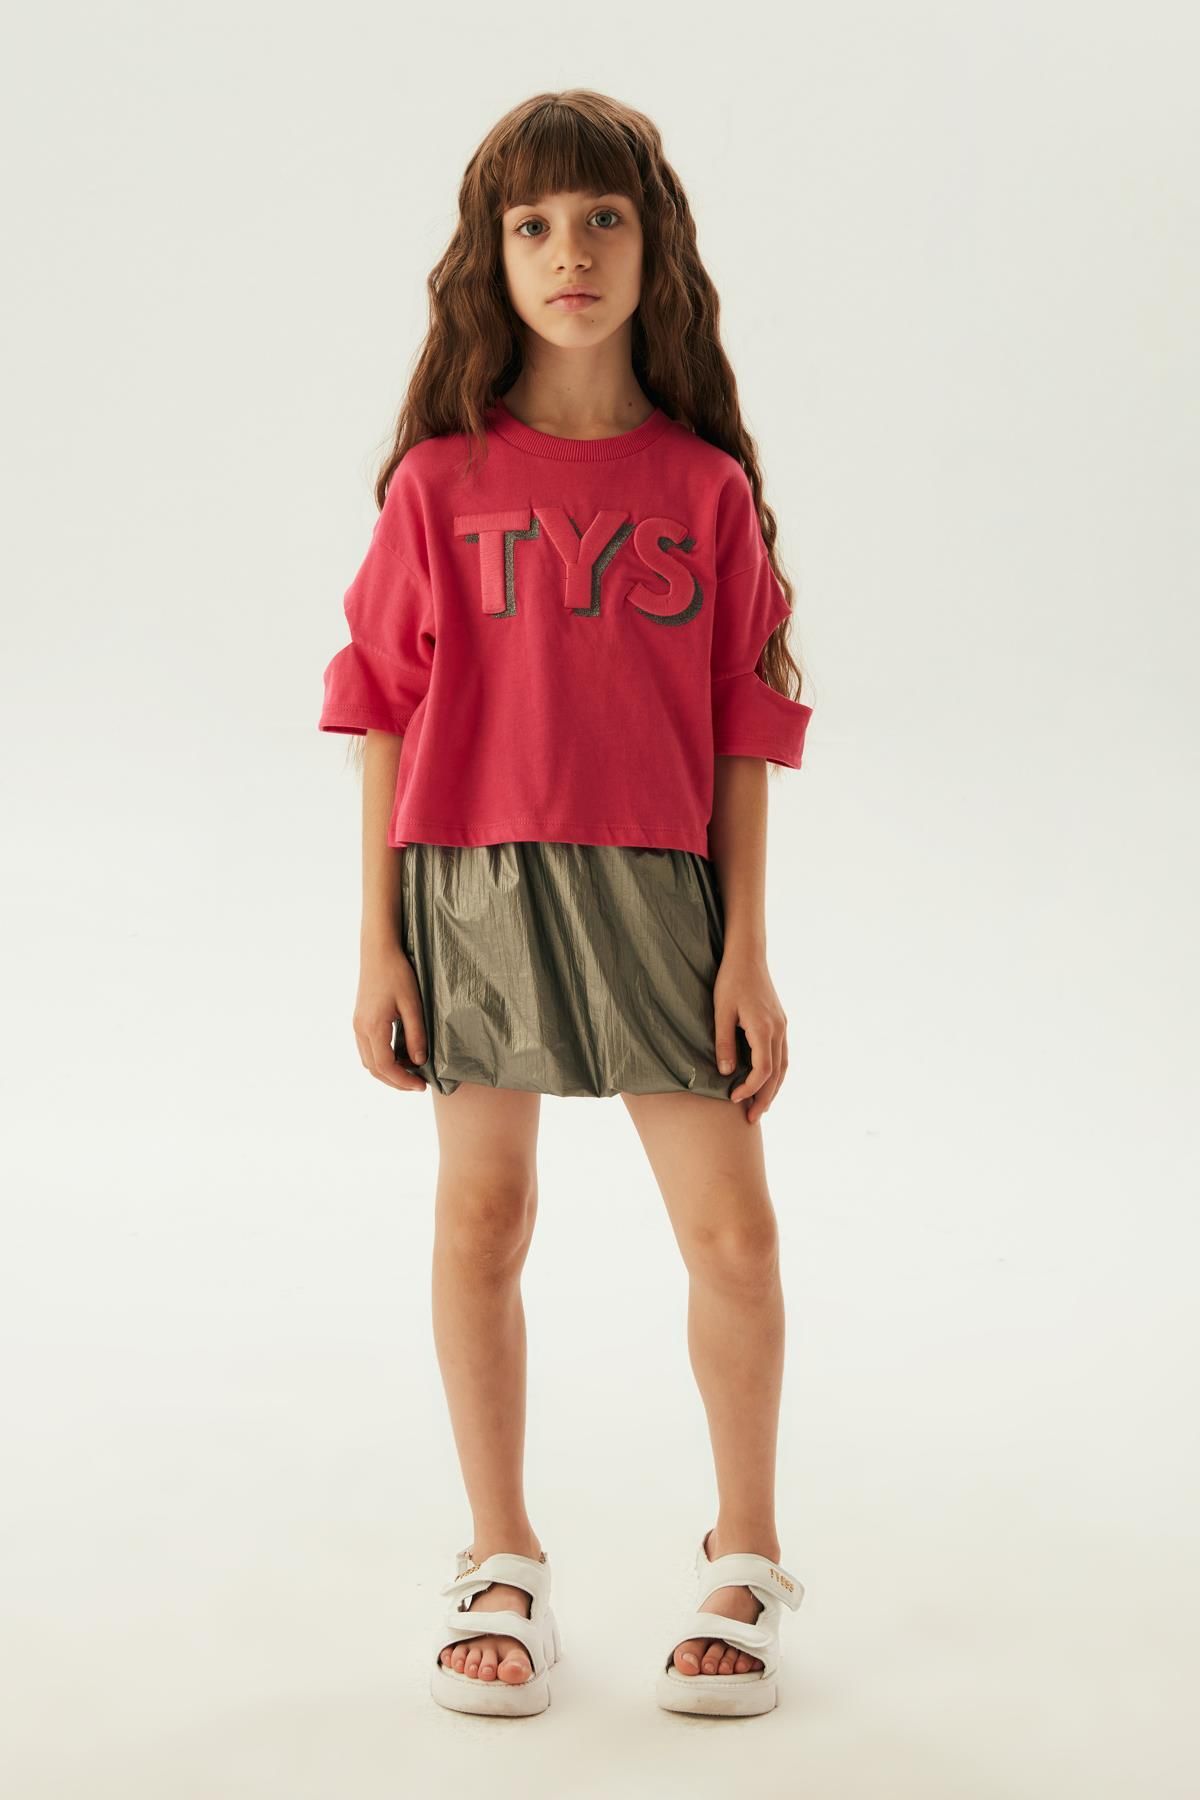 Tyess BG Store Kız Çocuk Fuşya T-Shirt